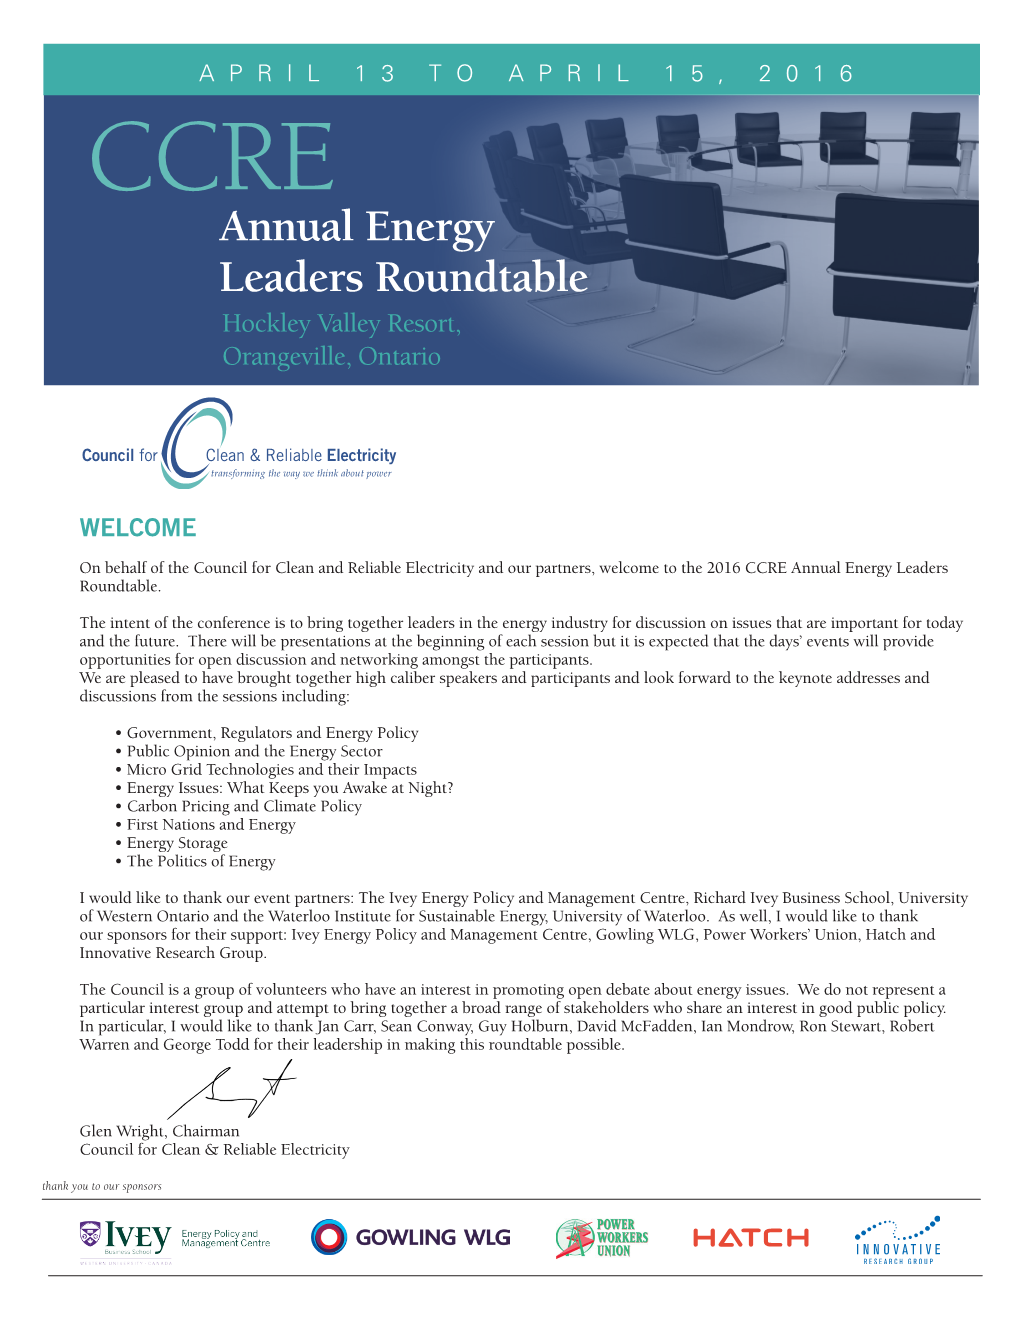 Annual Energy Leaders Roundtable Hockley Valley Resort, Orangeville, Ontario